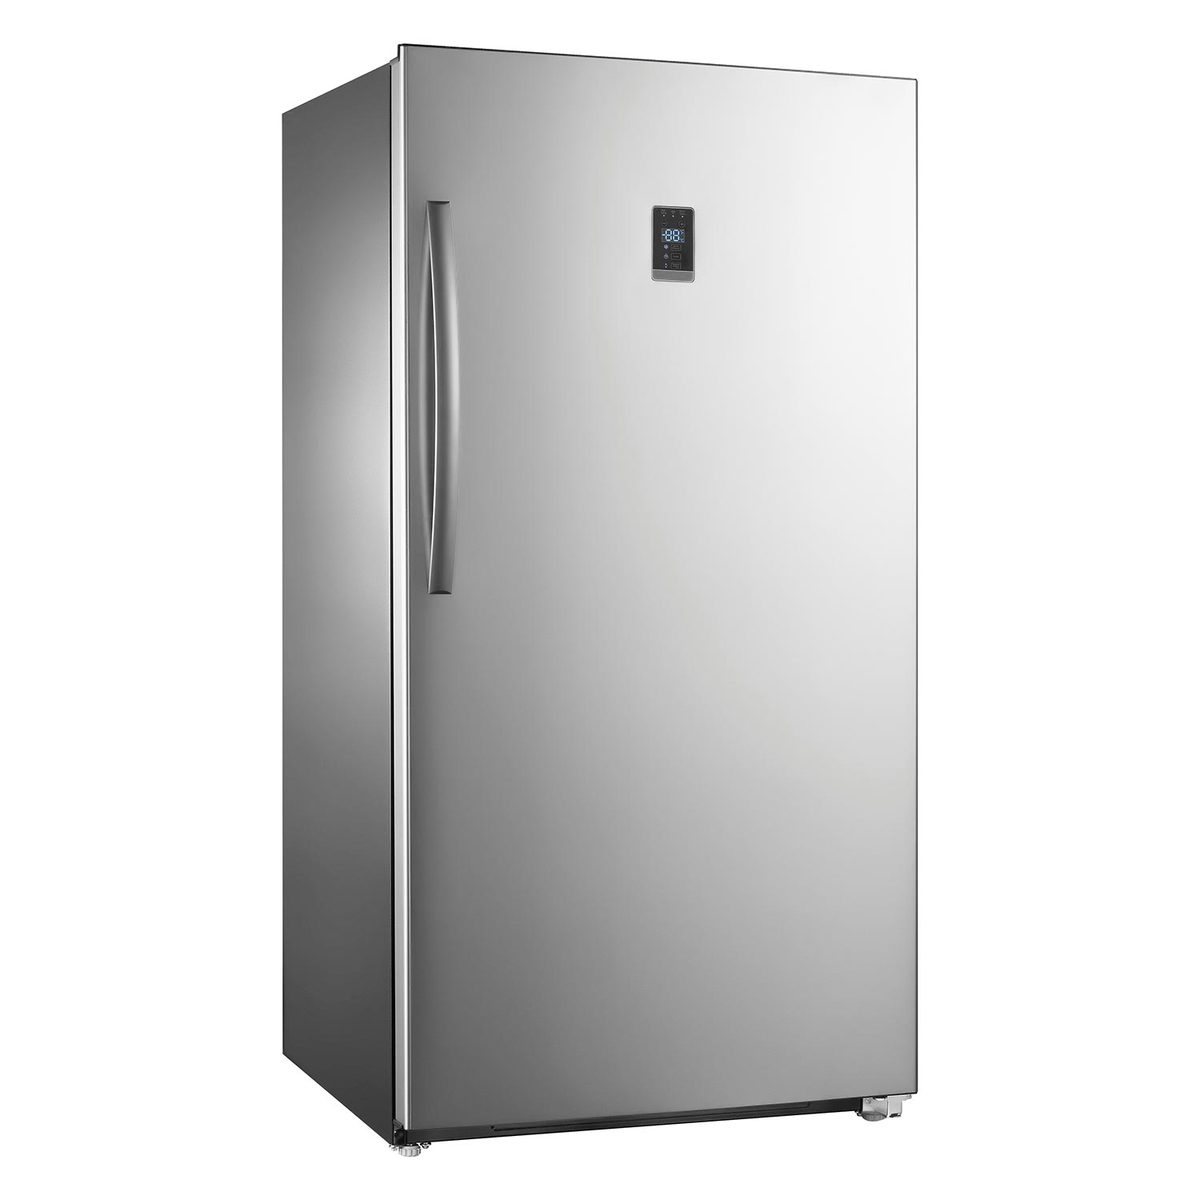 Freezerless refrigerators